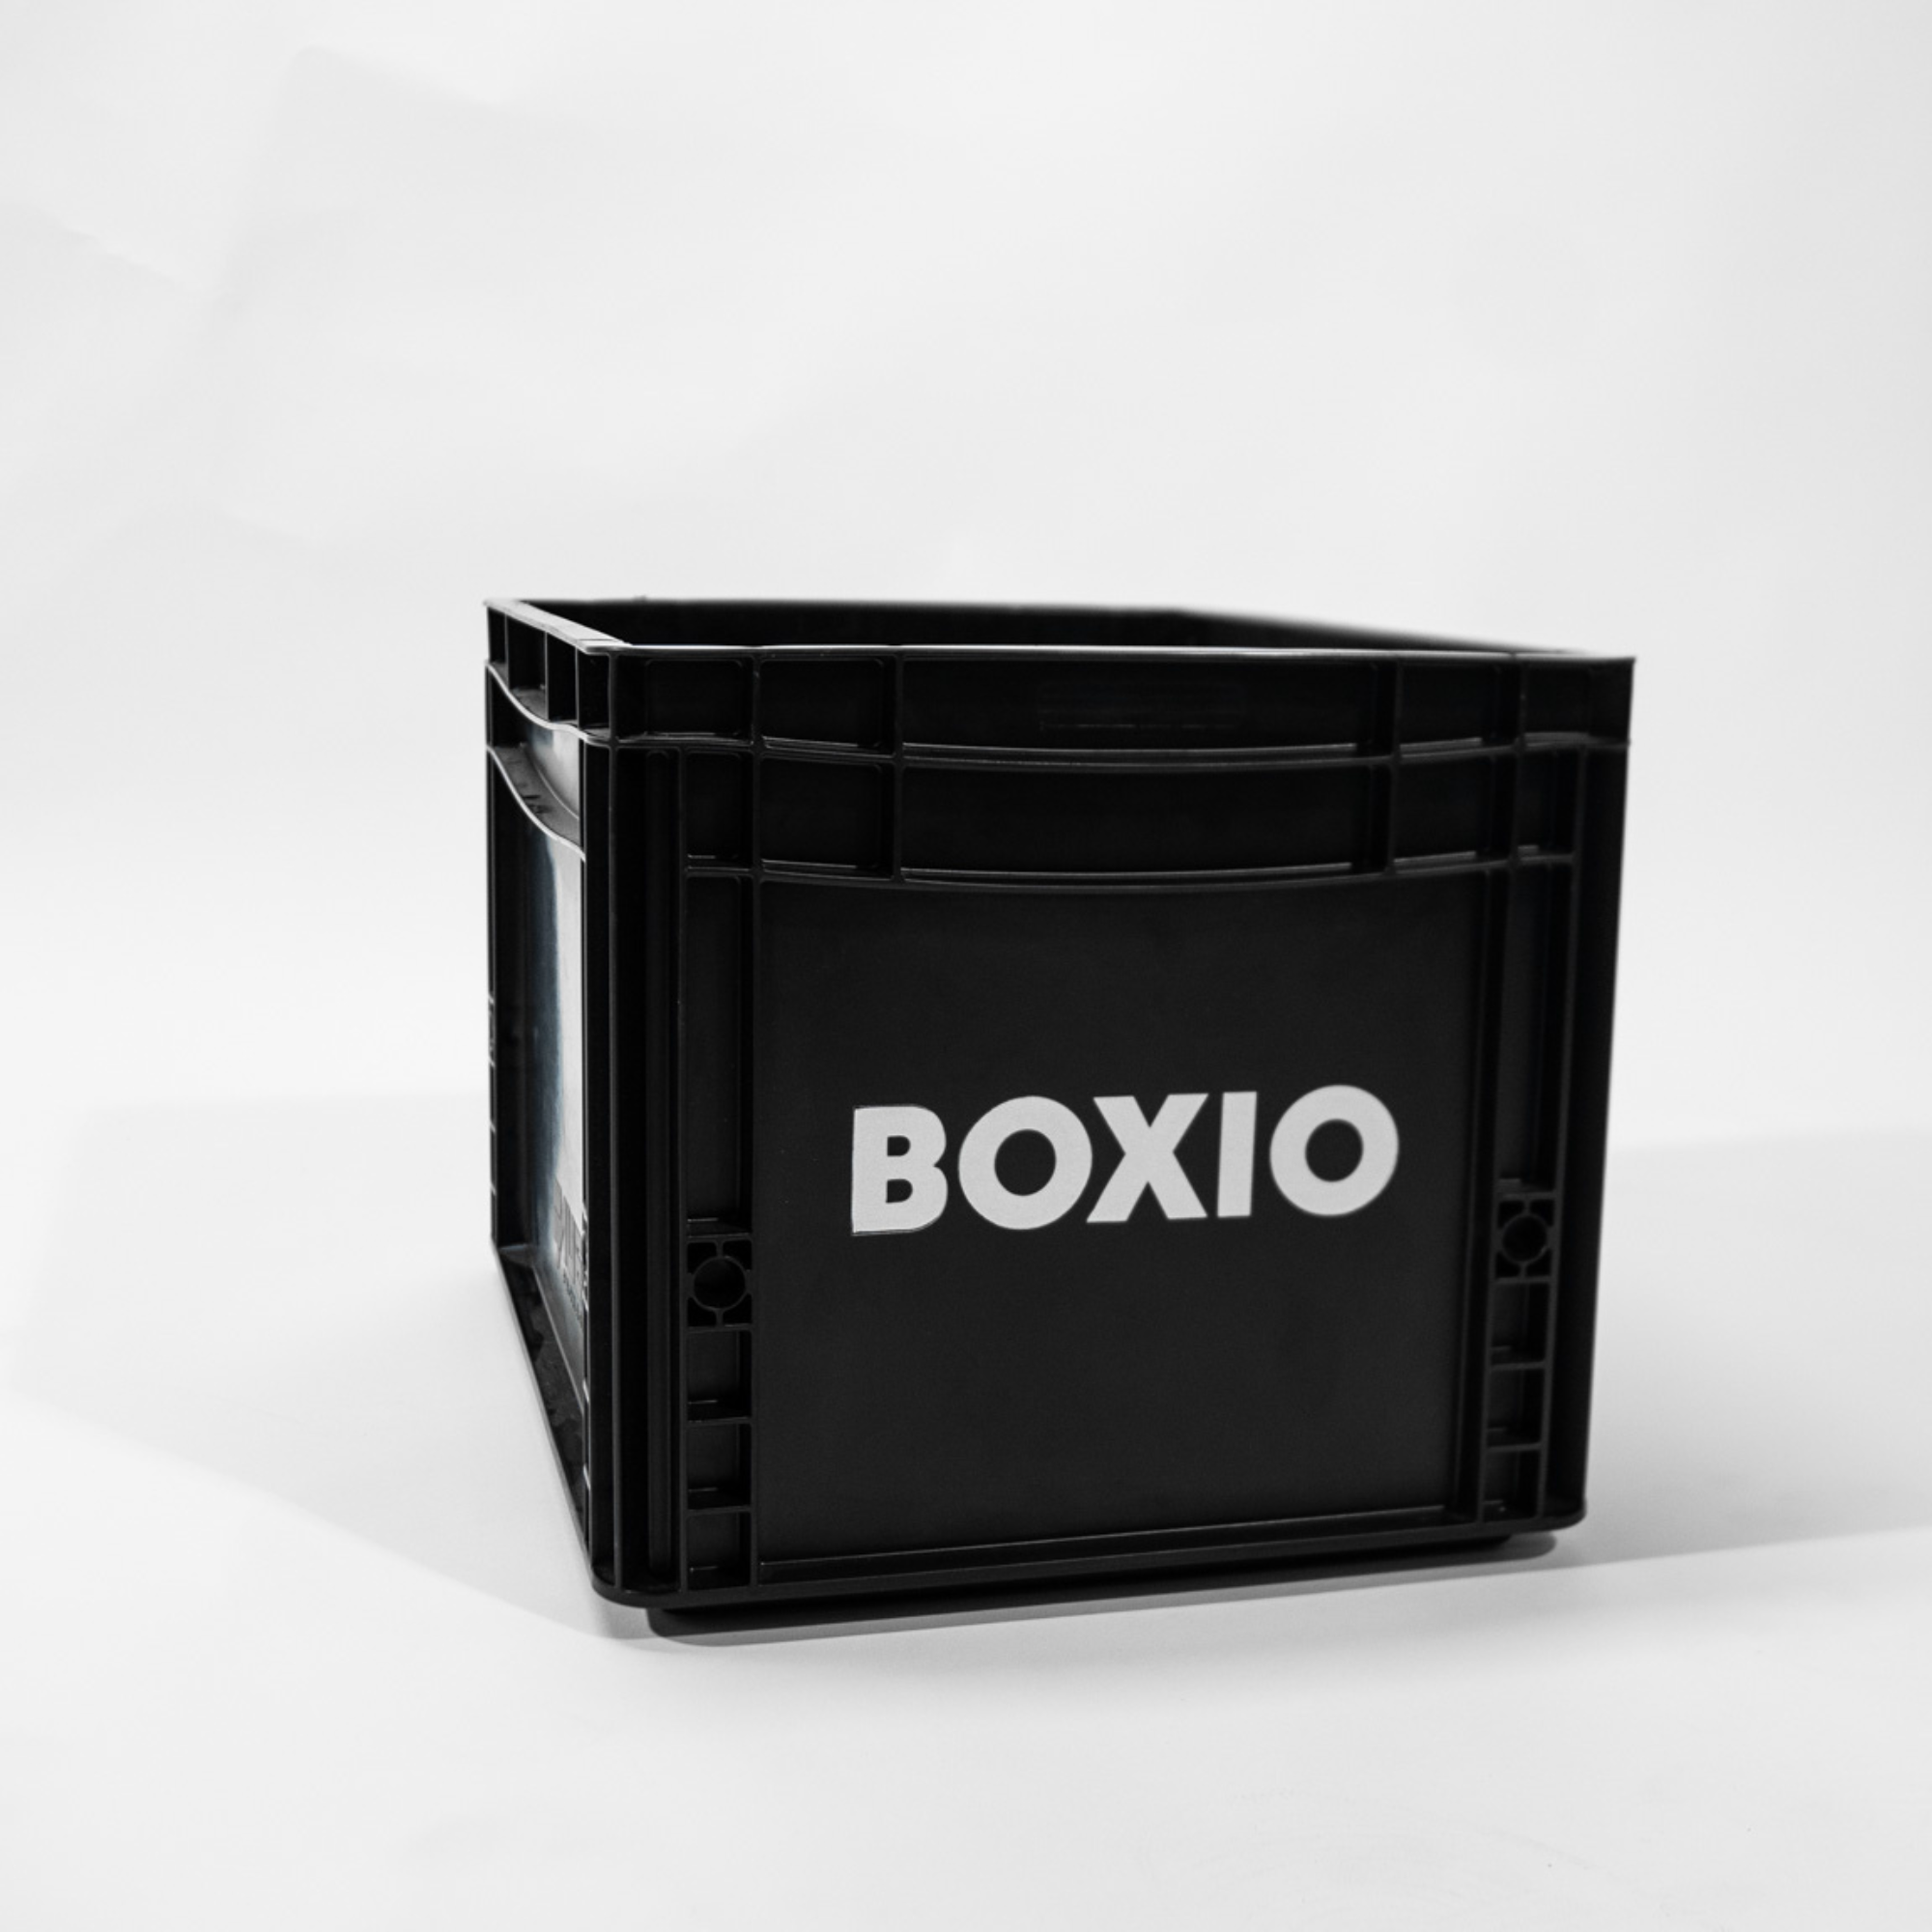 Eurobox "BOXIO" with drill holes for BOXIO - TOILET & WASH